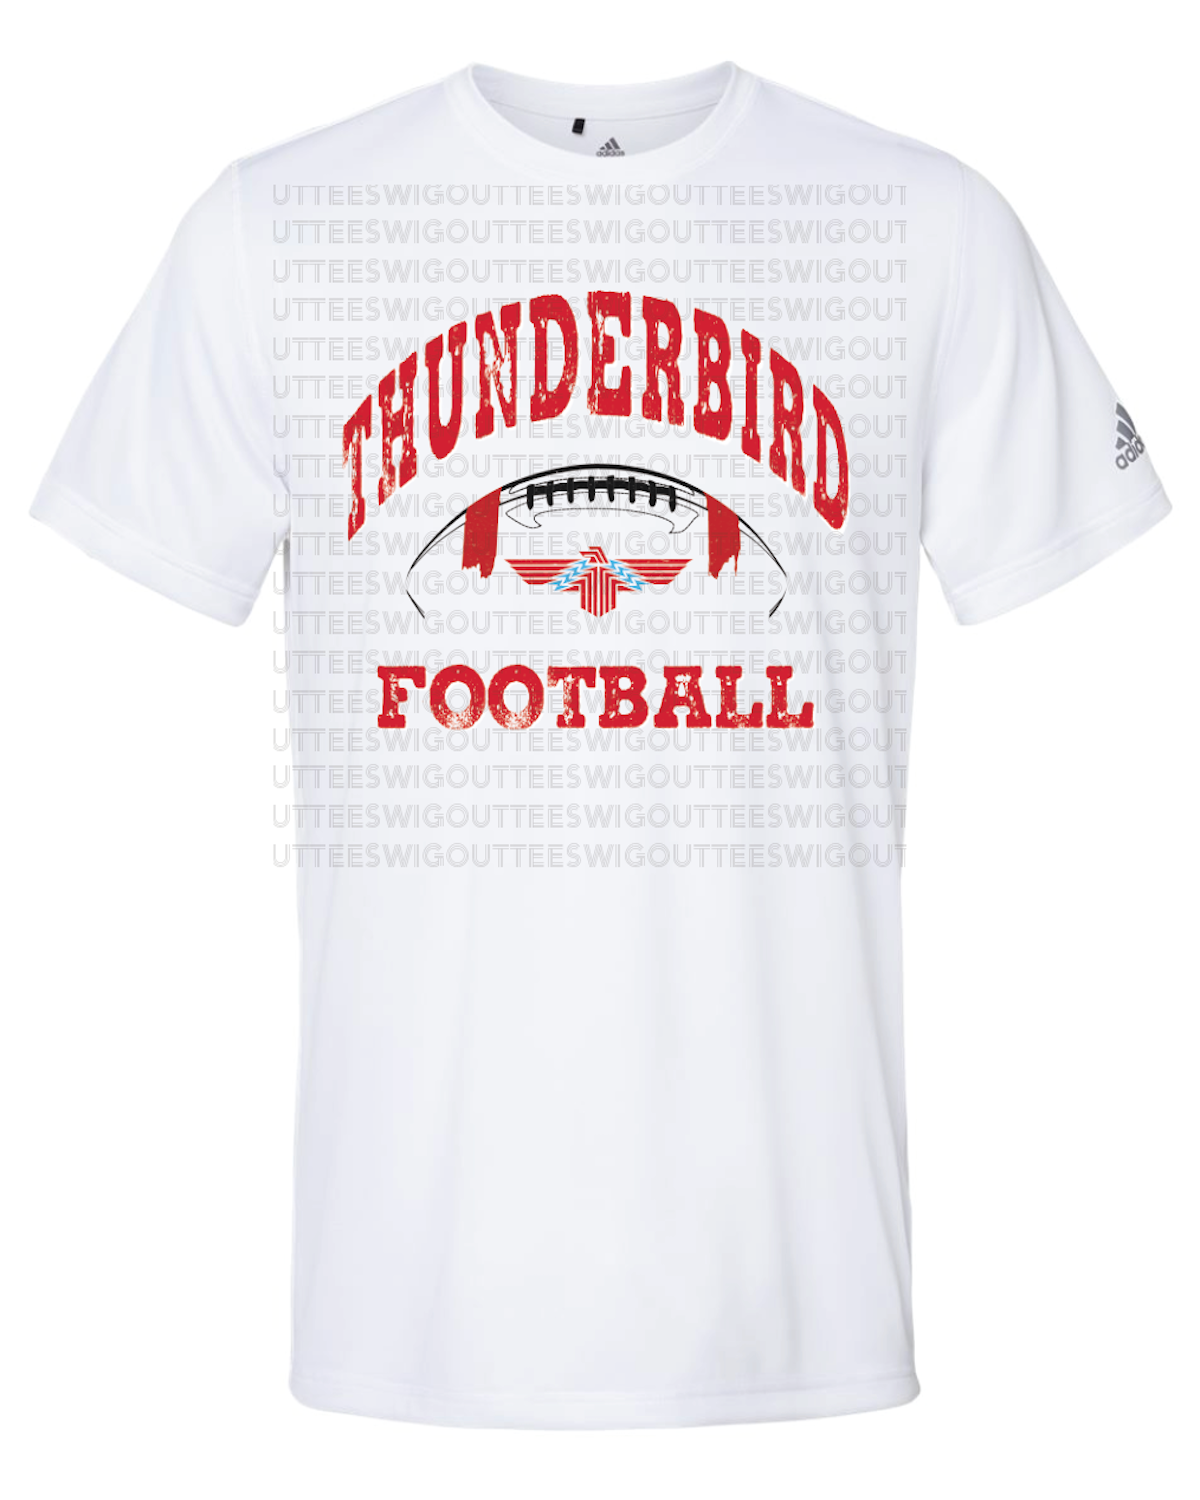 Thunderbird Football Adidas  Performance Polo